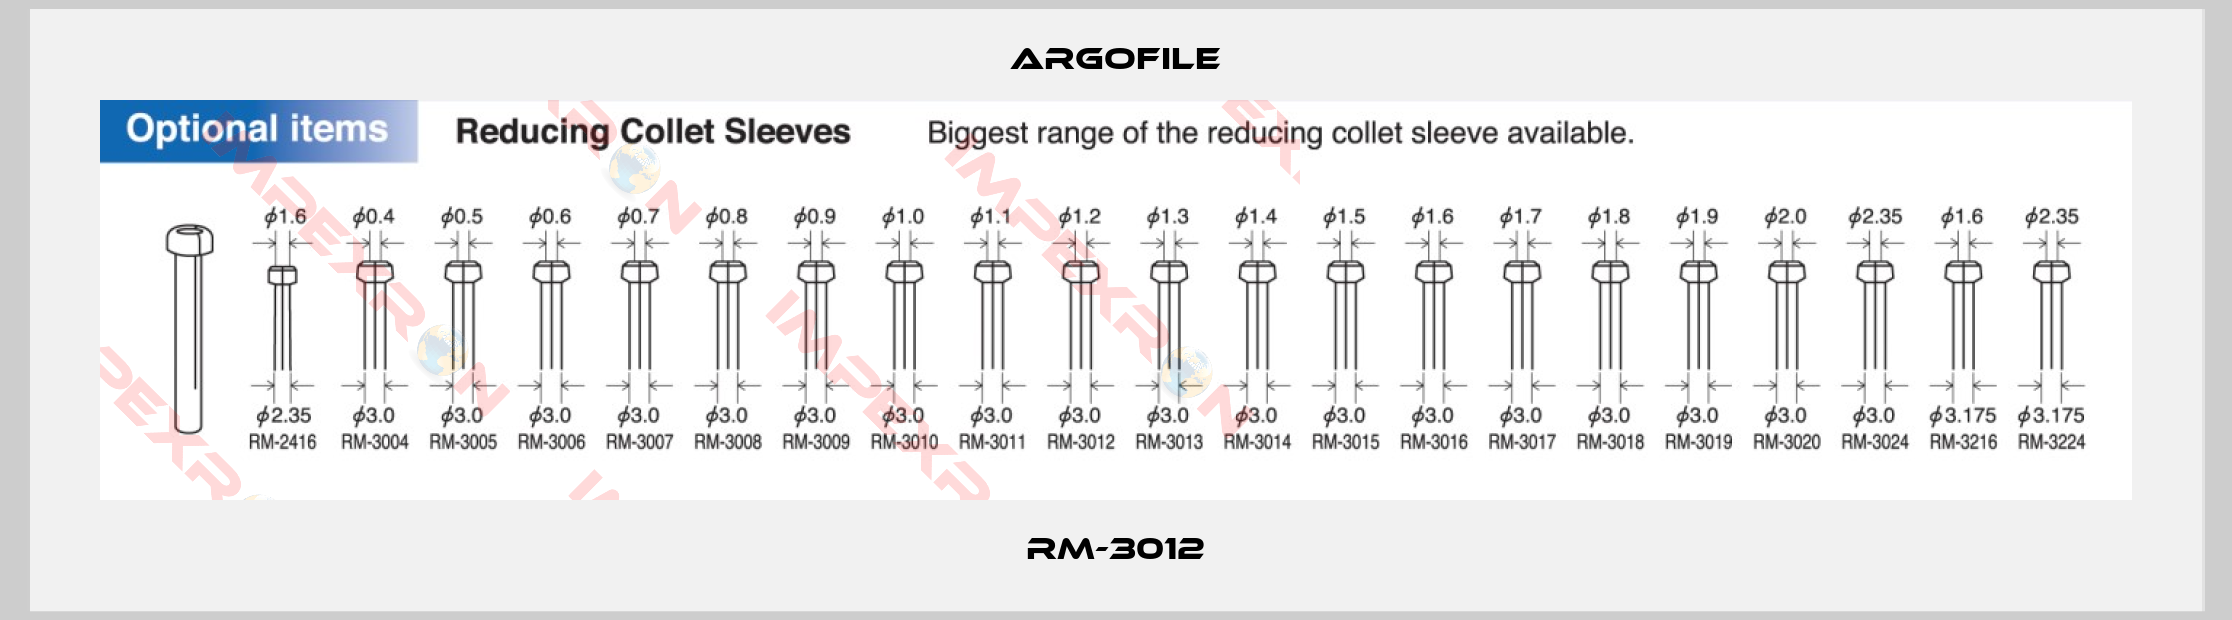 Argofile-RM-3012